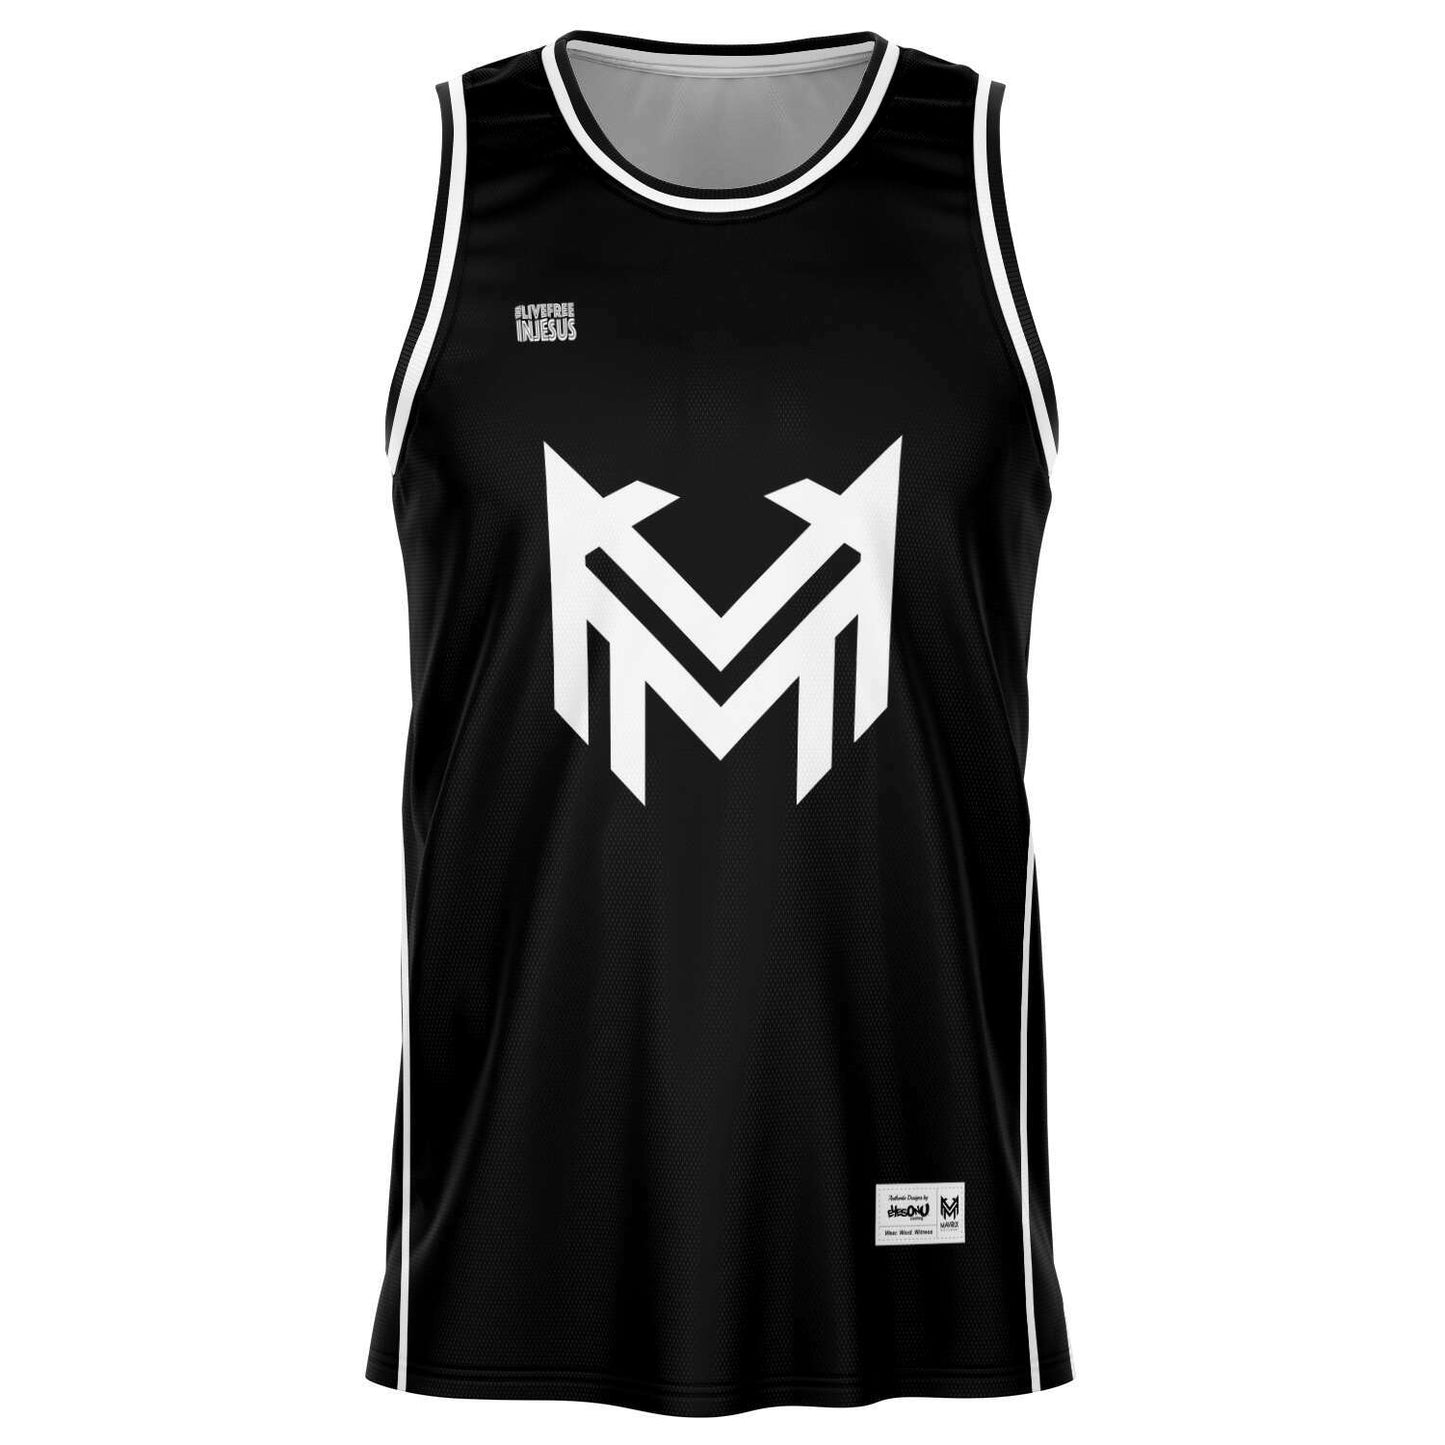 Mavrix Team Black - Basketball Jersey